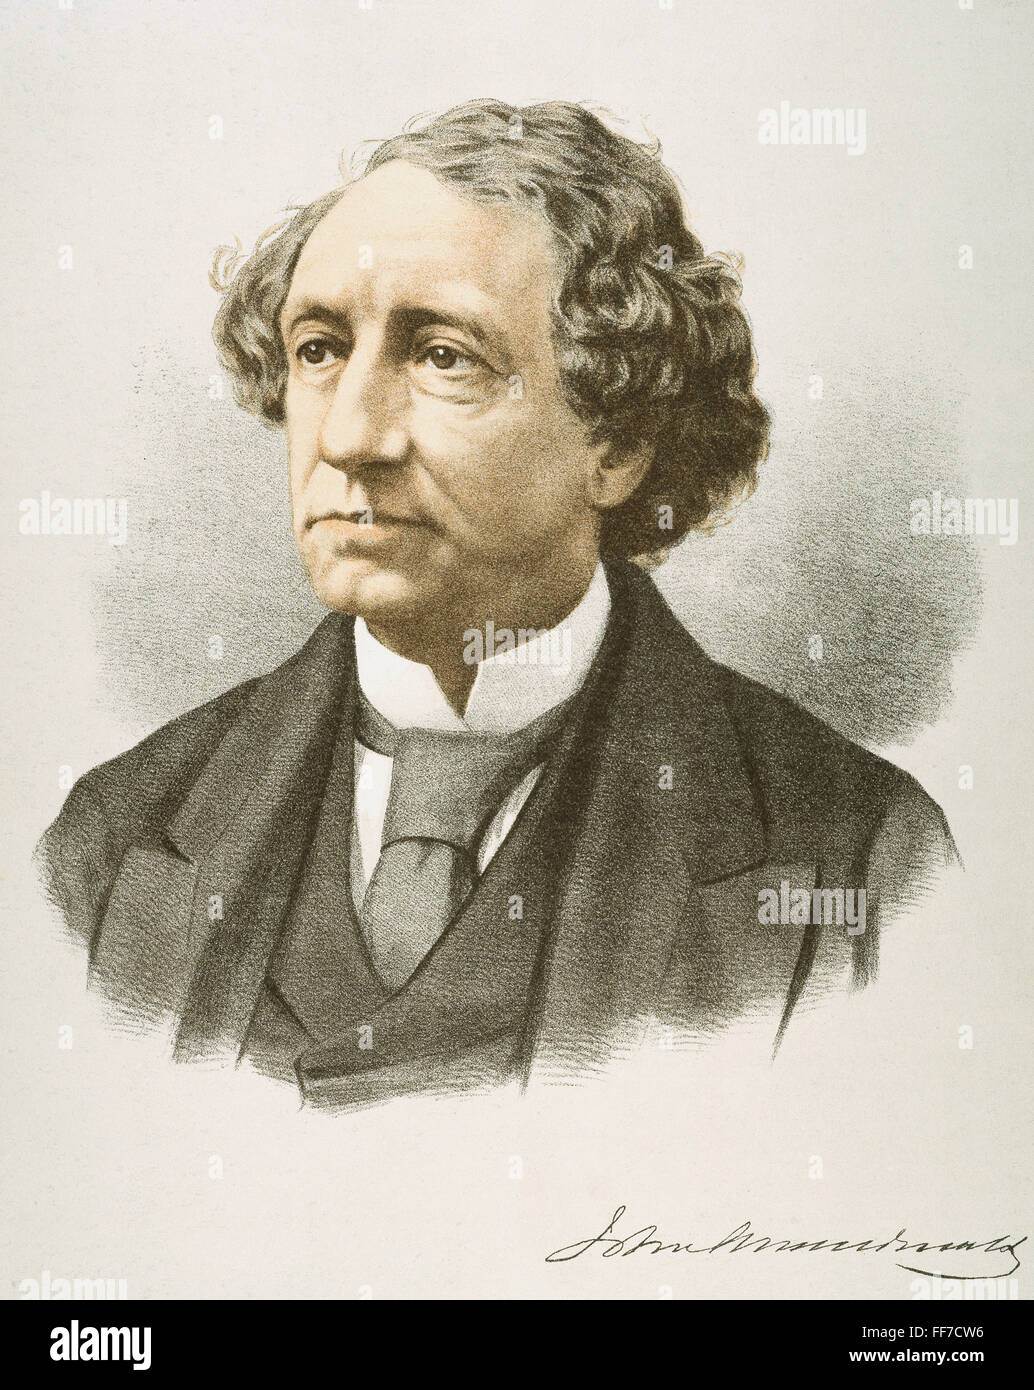 JOHN ALEXANDER MacDONALD /n(1815-1891). Canadian politician. Lithograph, 19th century. Stock Photo